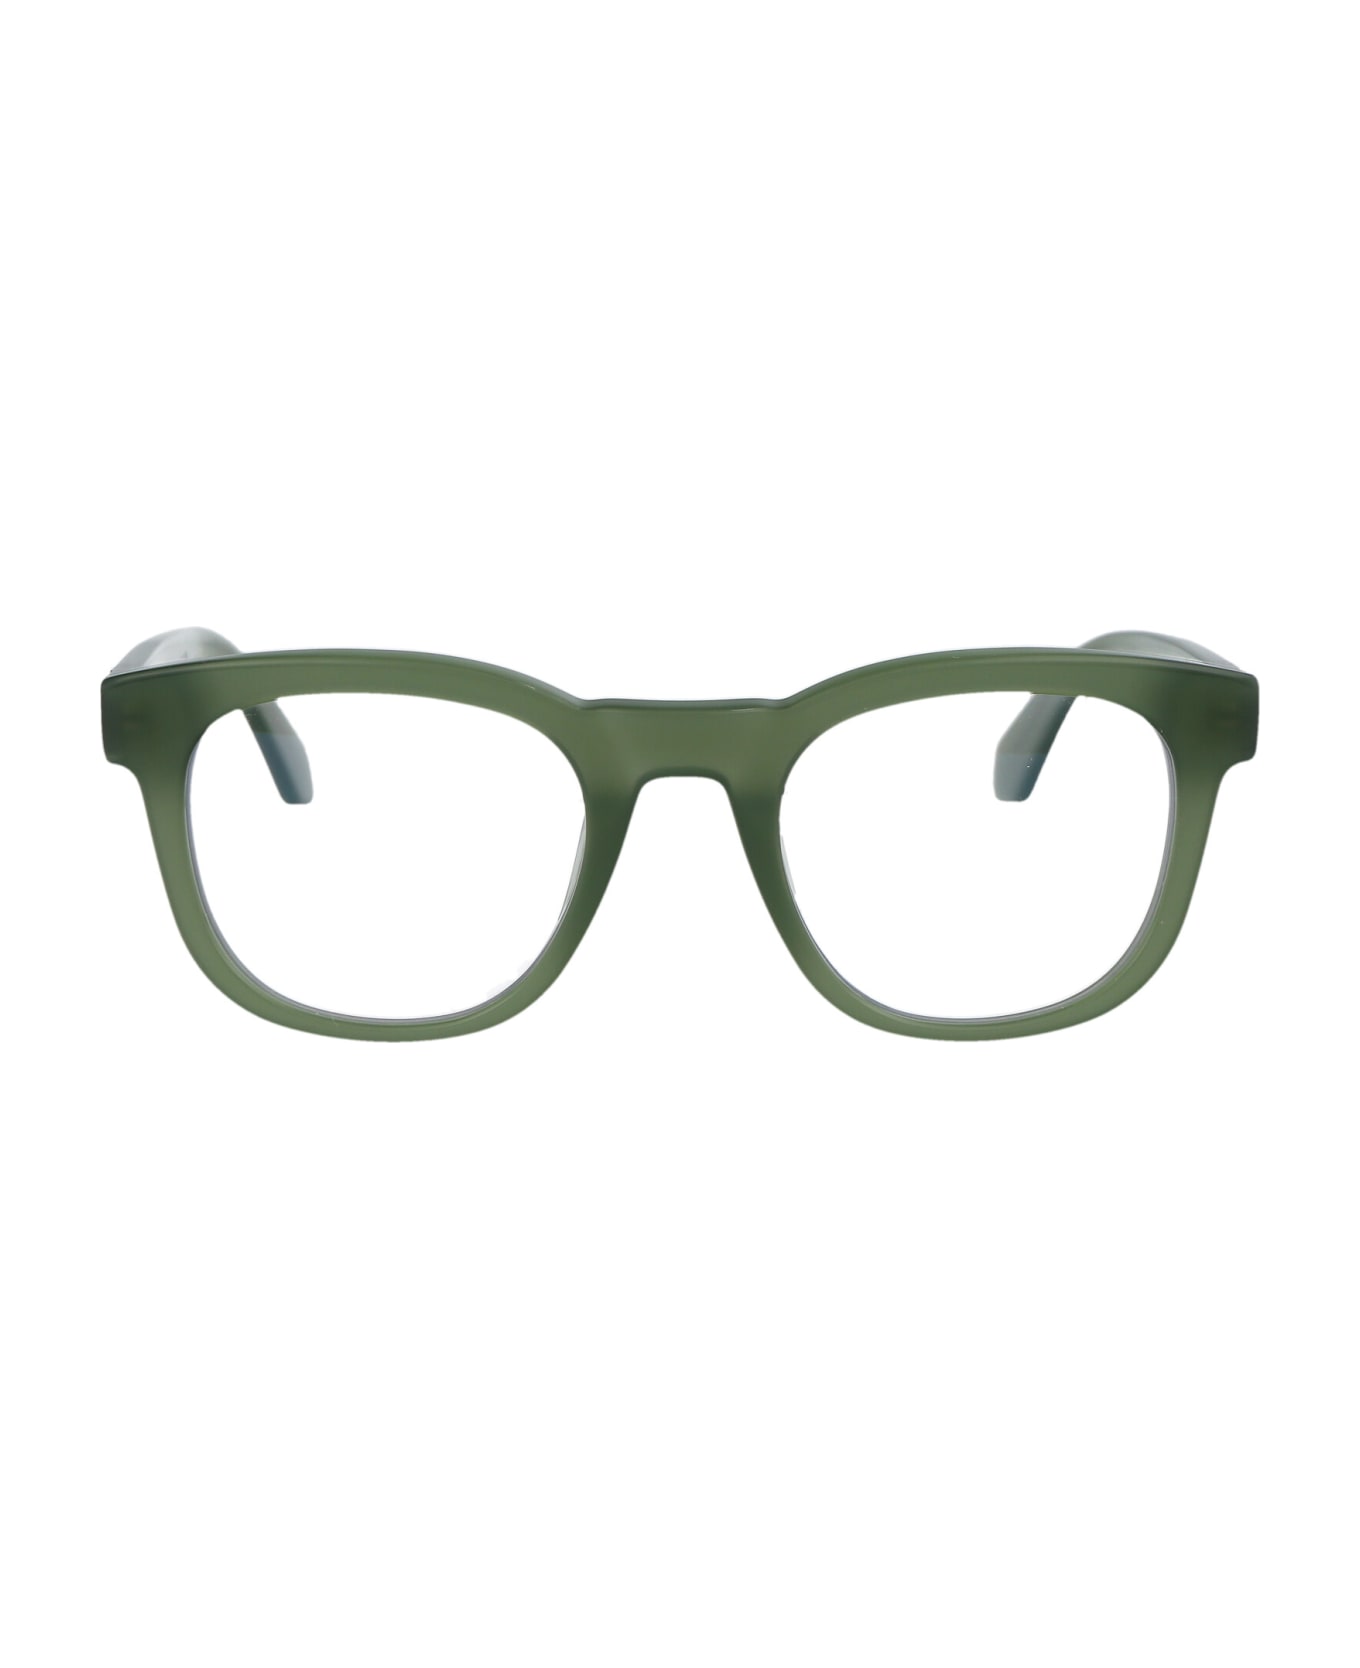 Off-White Optical Style 71 Glasses - 5900 OLIVE GREEN  アイウェア